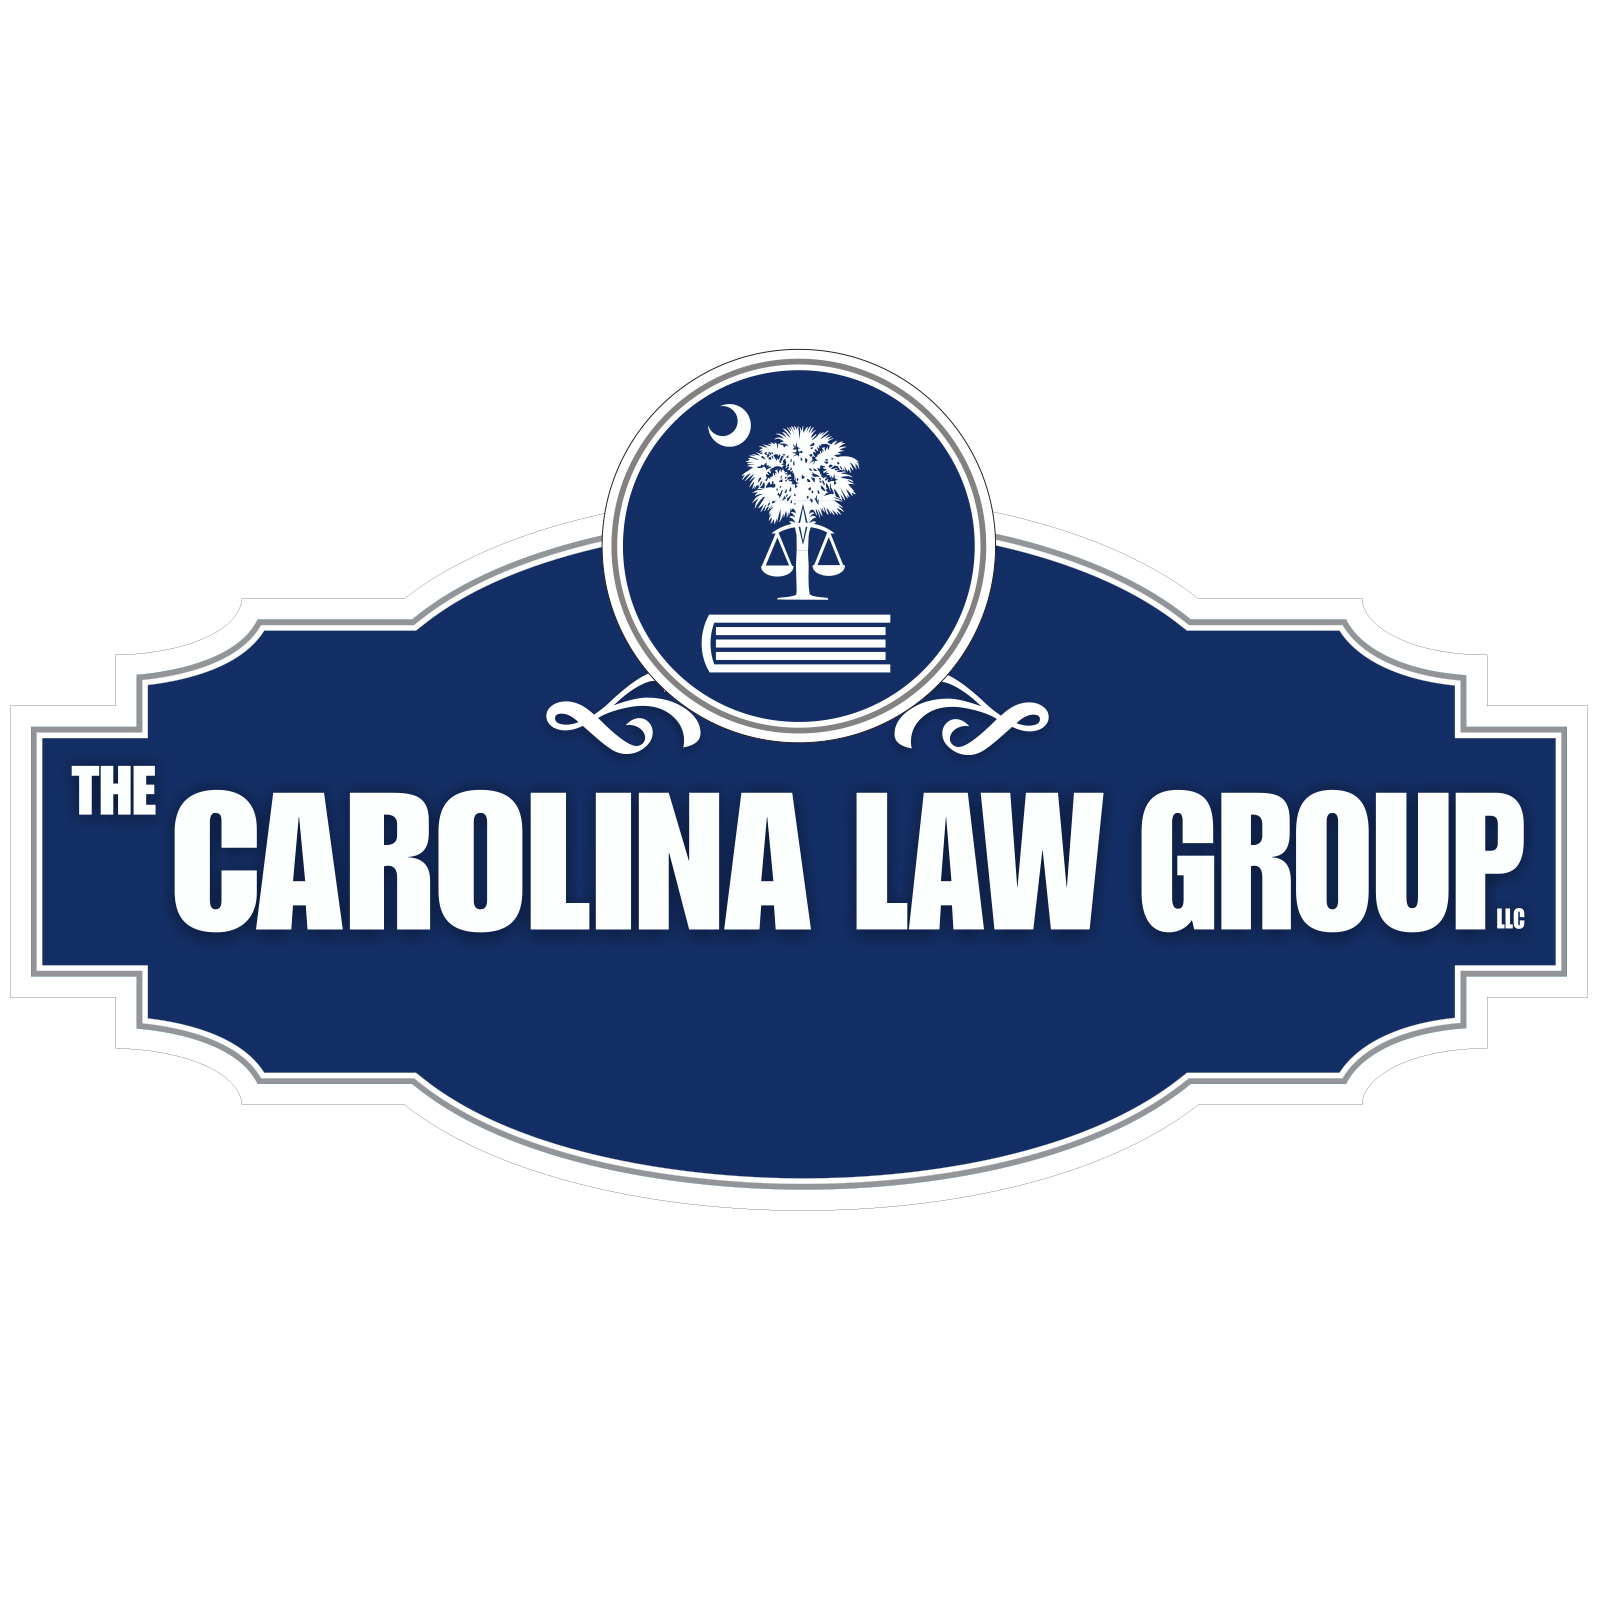 The Carolina Law Group